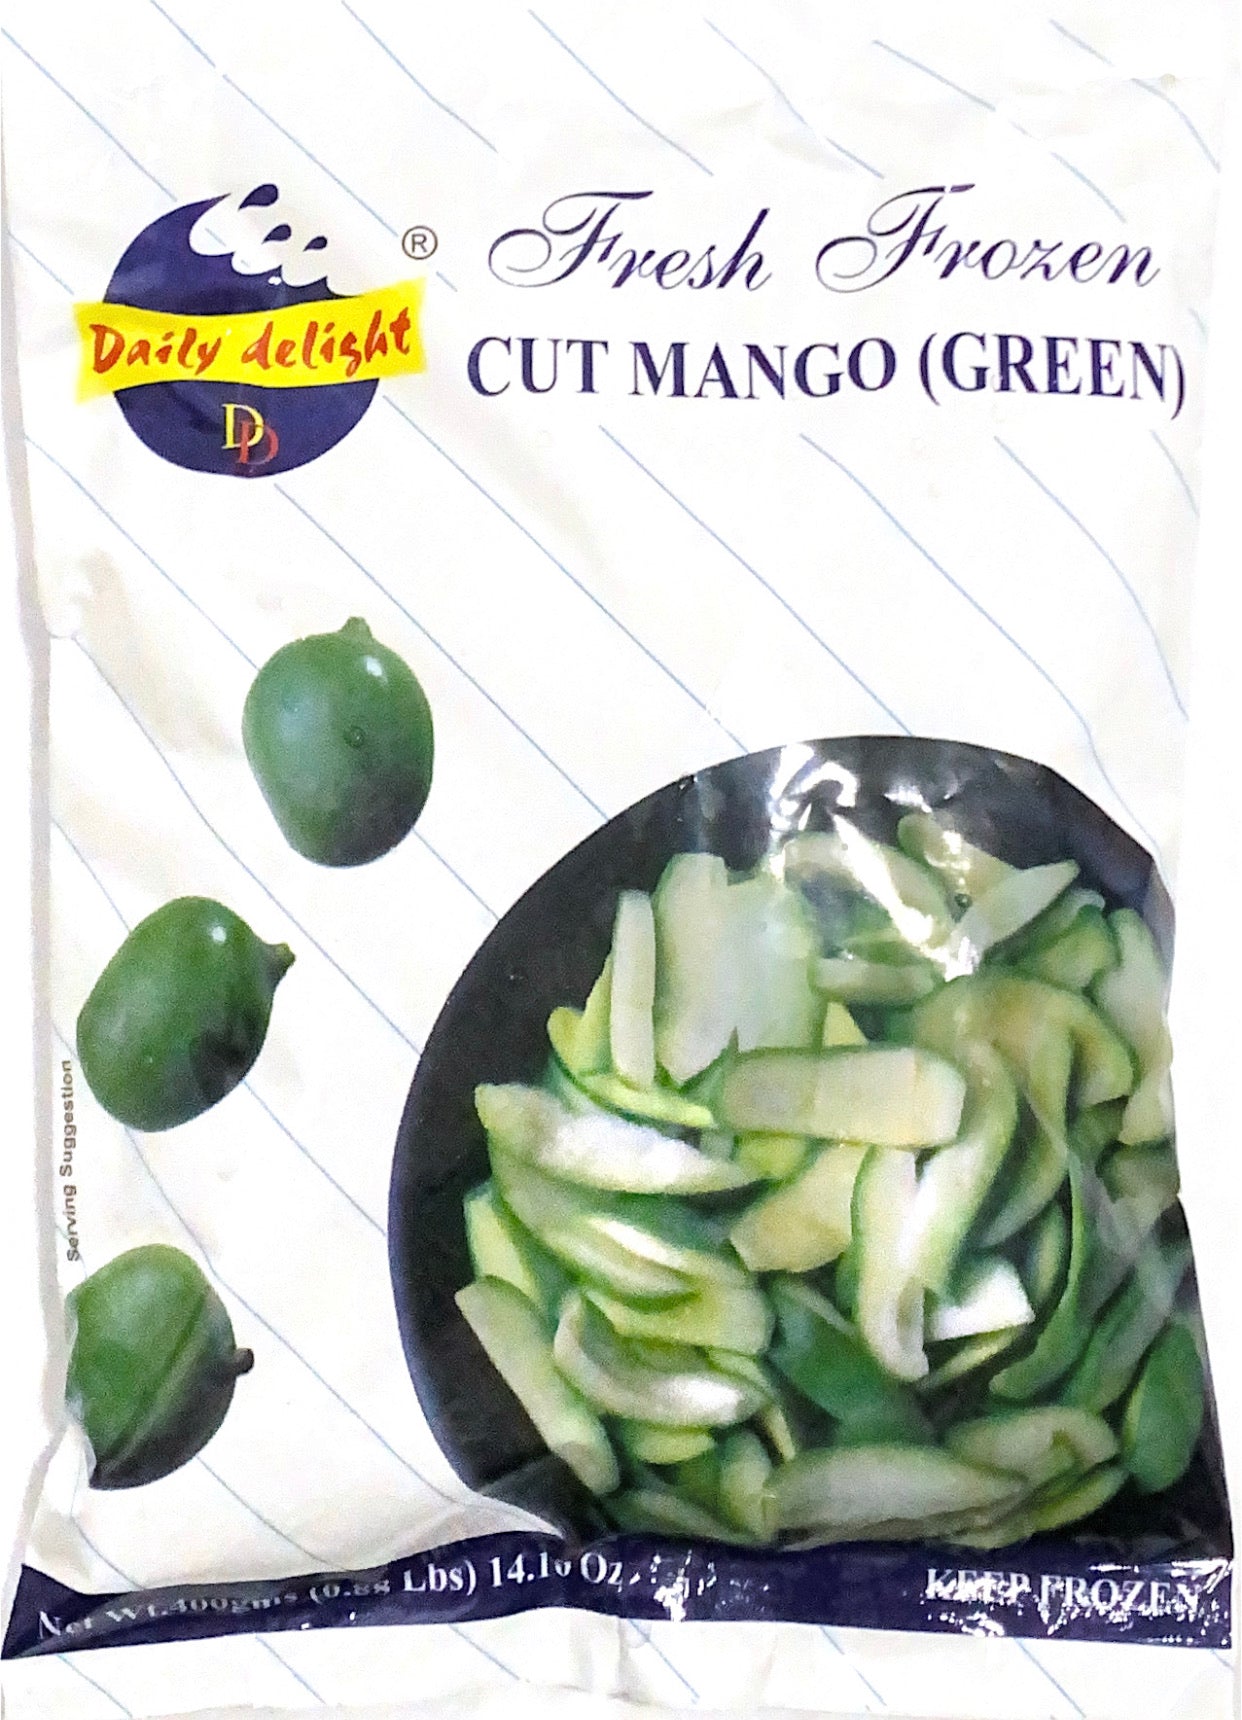 Cut Mango (Green)